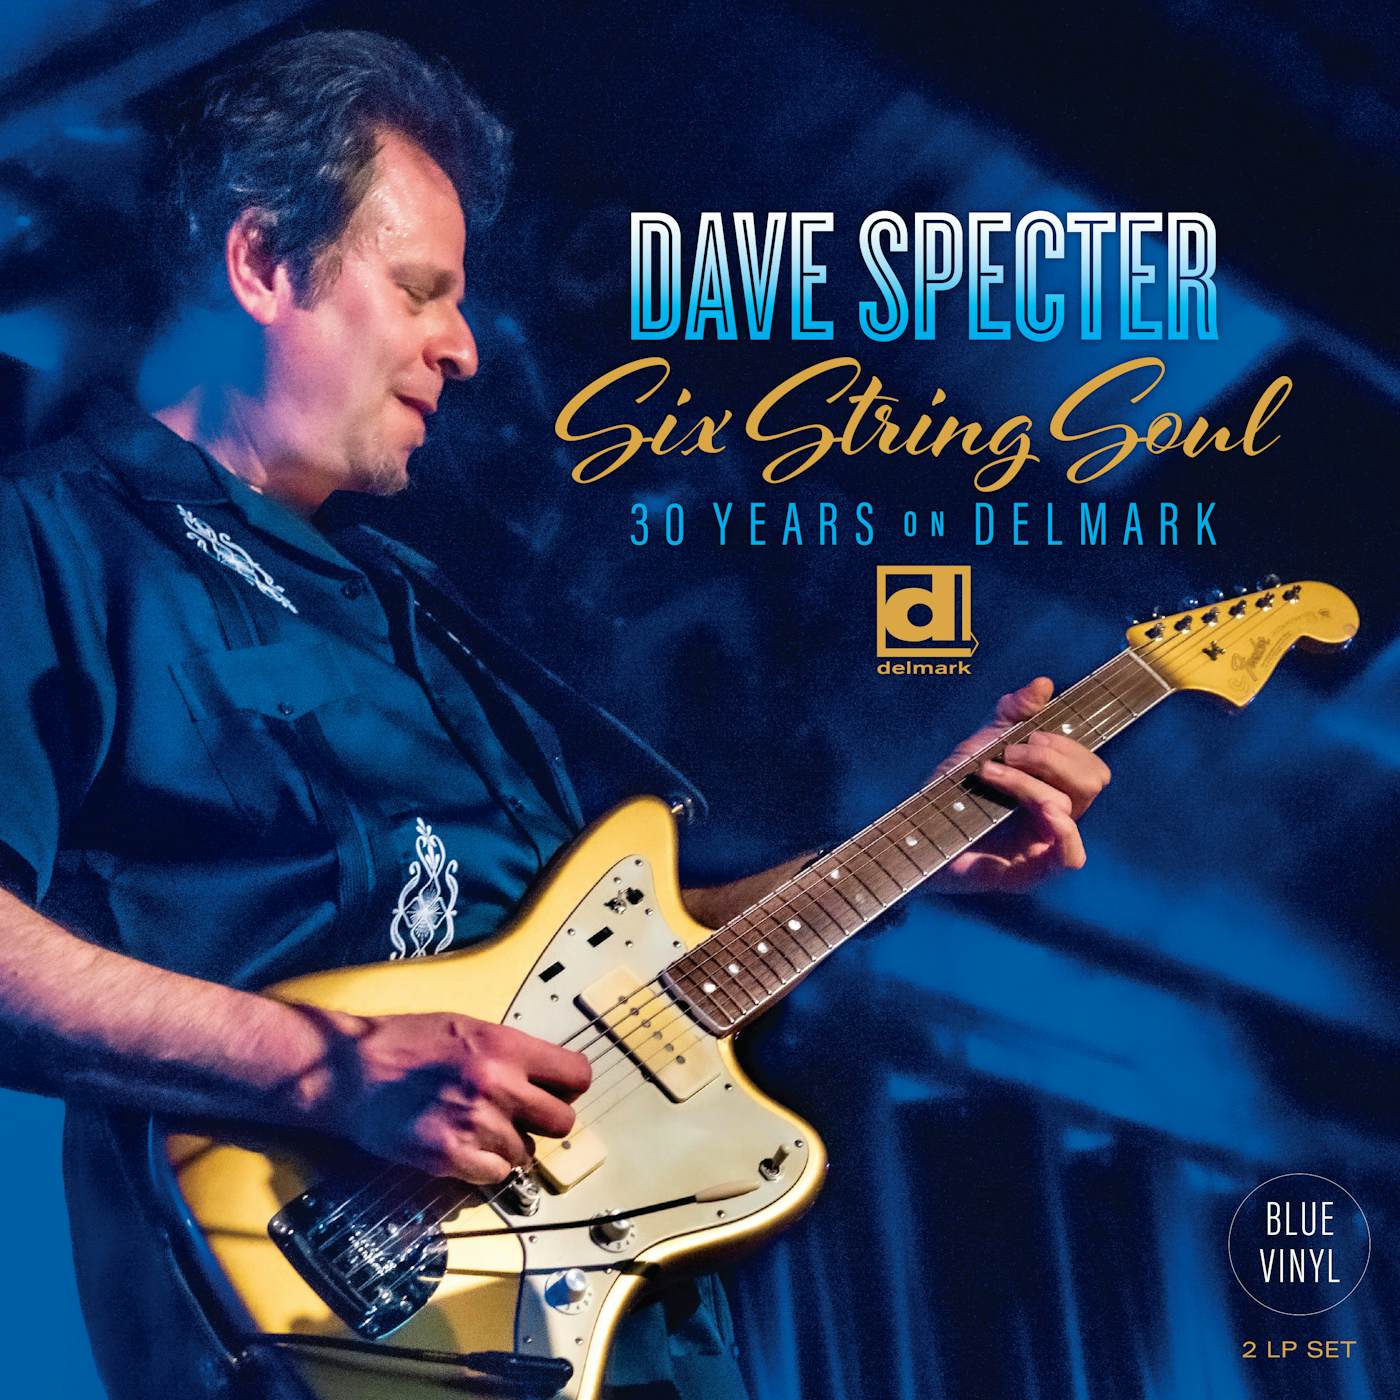 Dave Specter Six String Soul: 30 Years On Delmark   B Vinyl Record